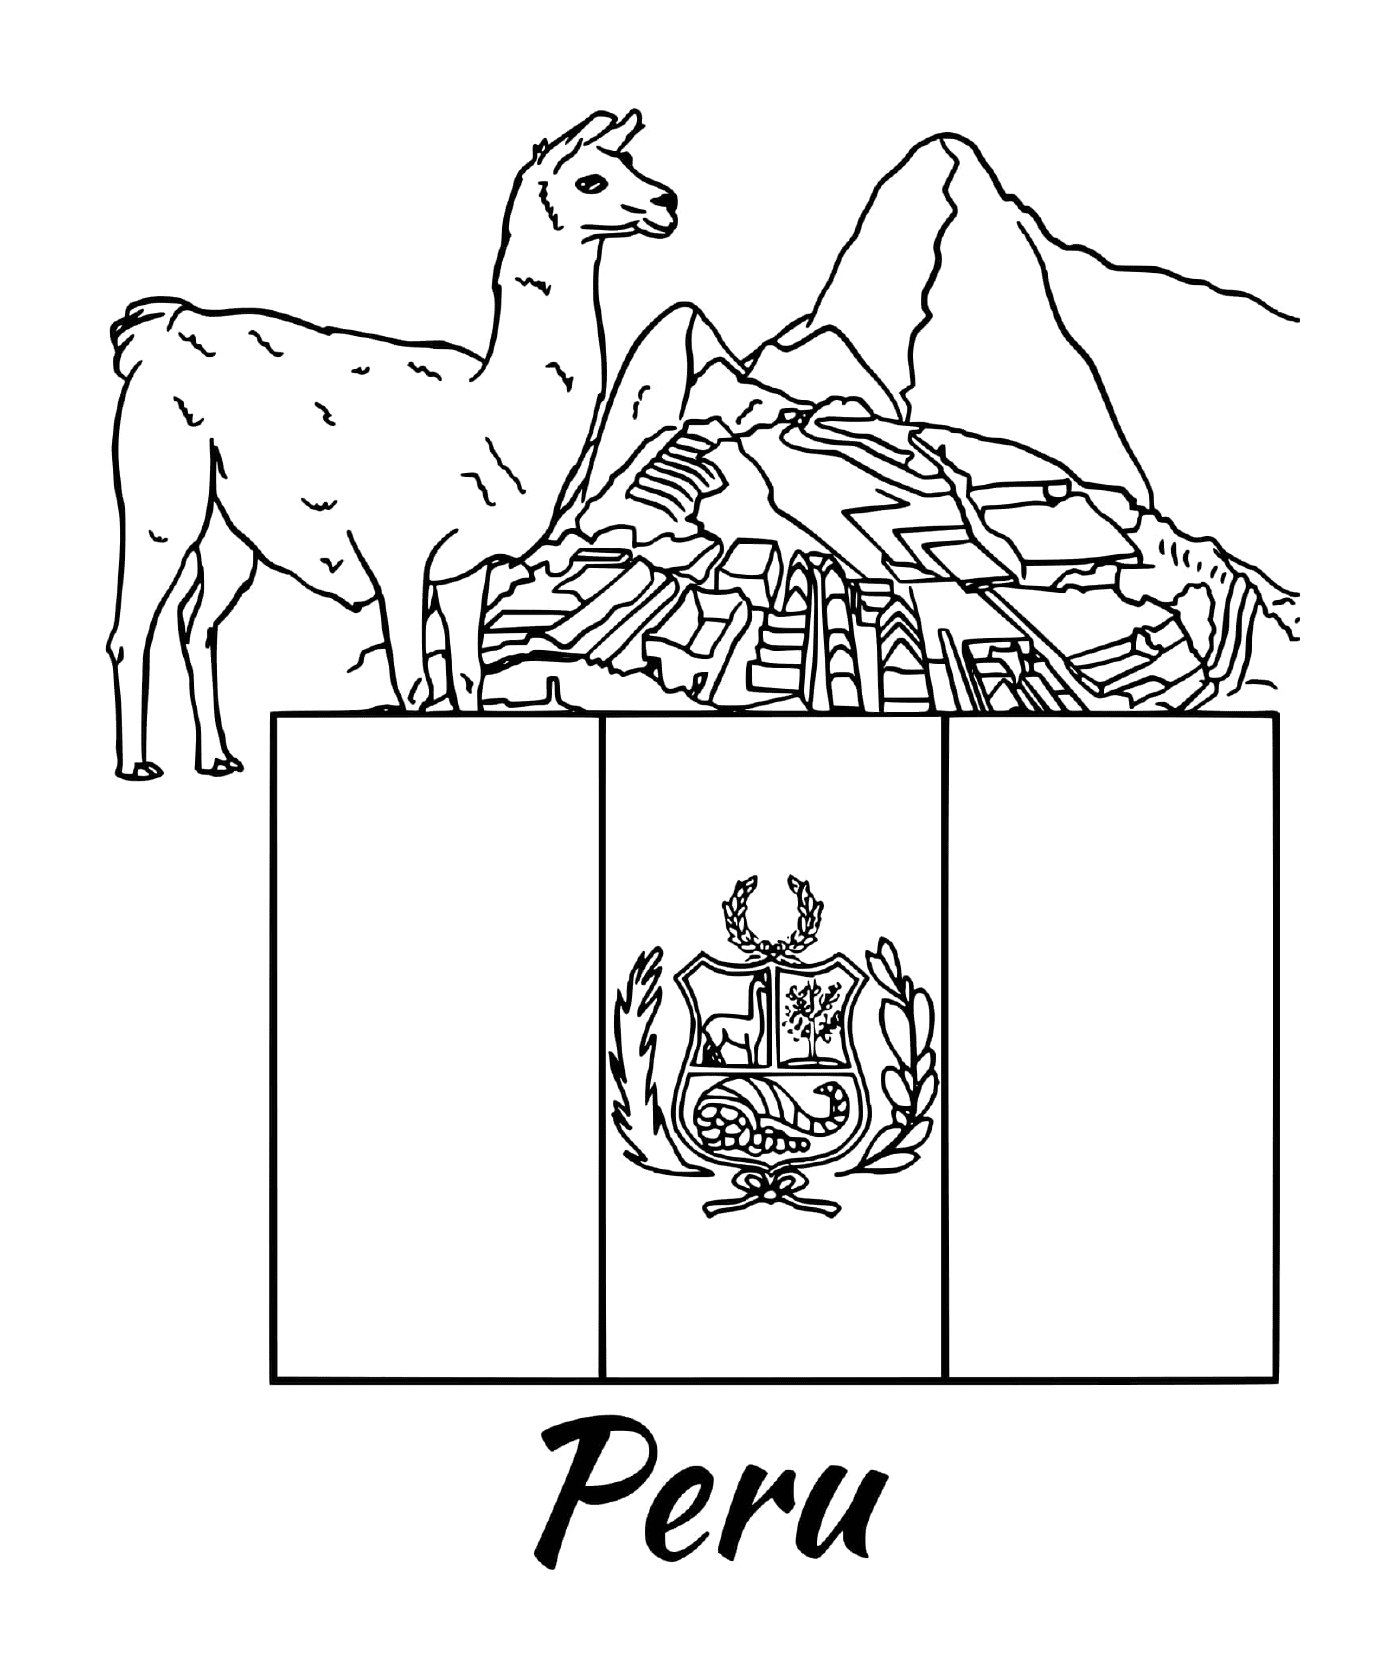  Flag of Peru, alpaca 